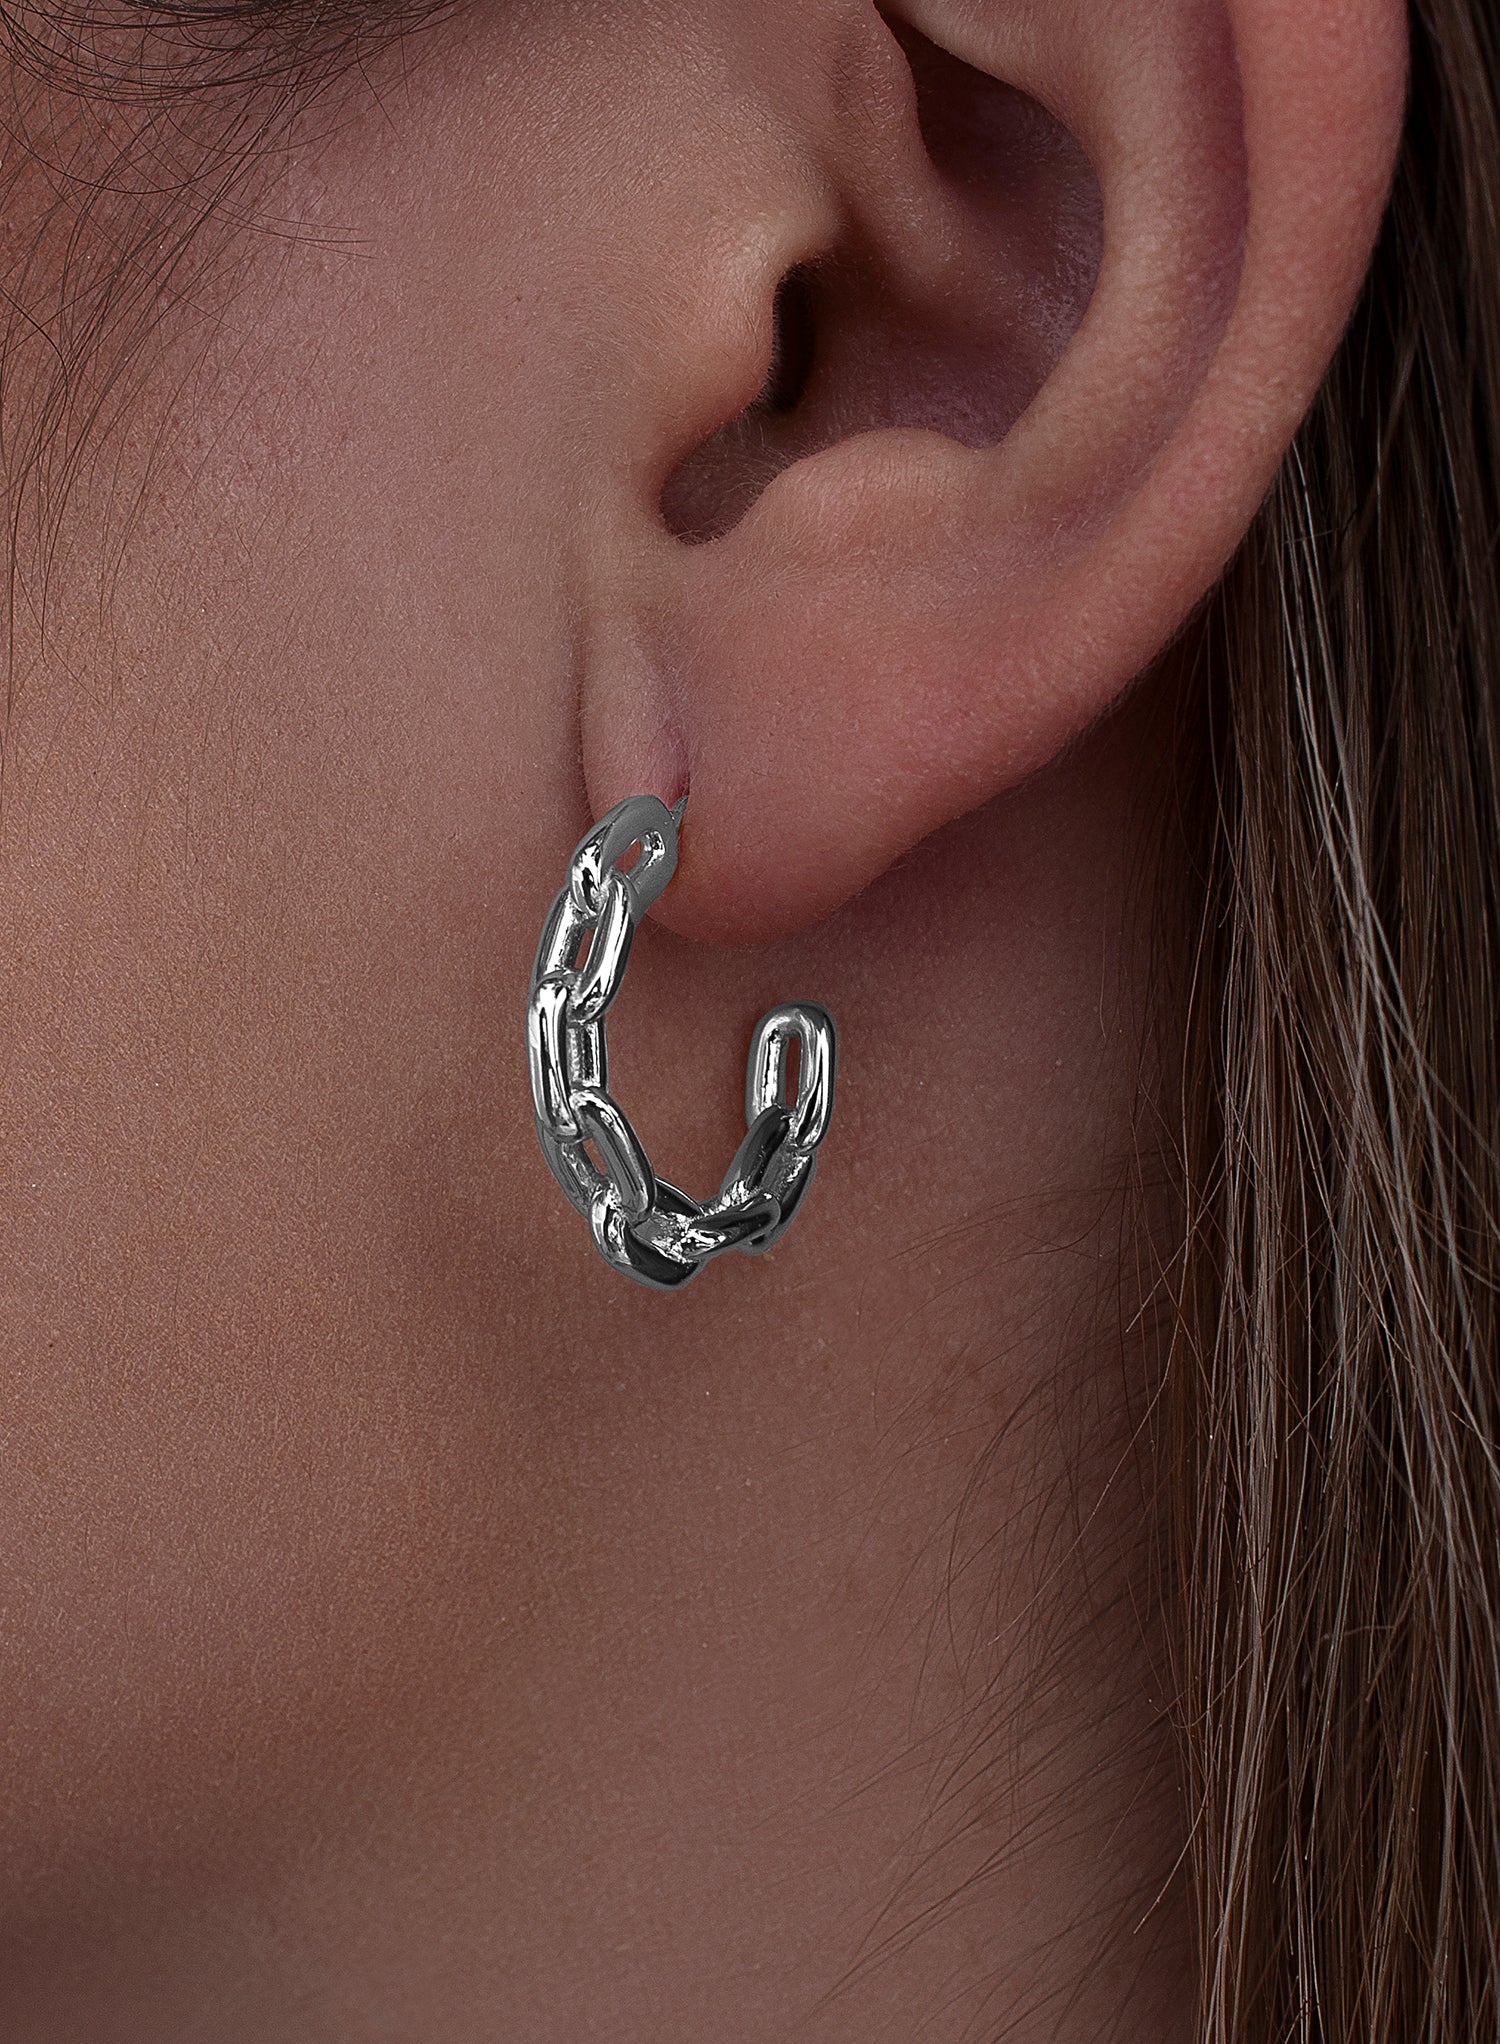 Earrings - Small silver hoop earrings link model